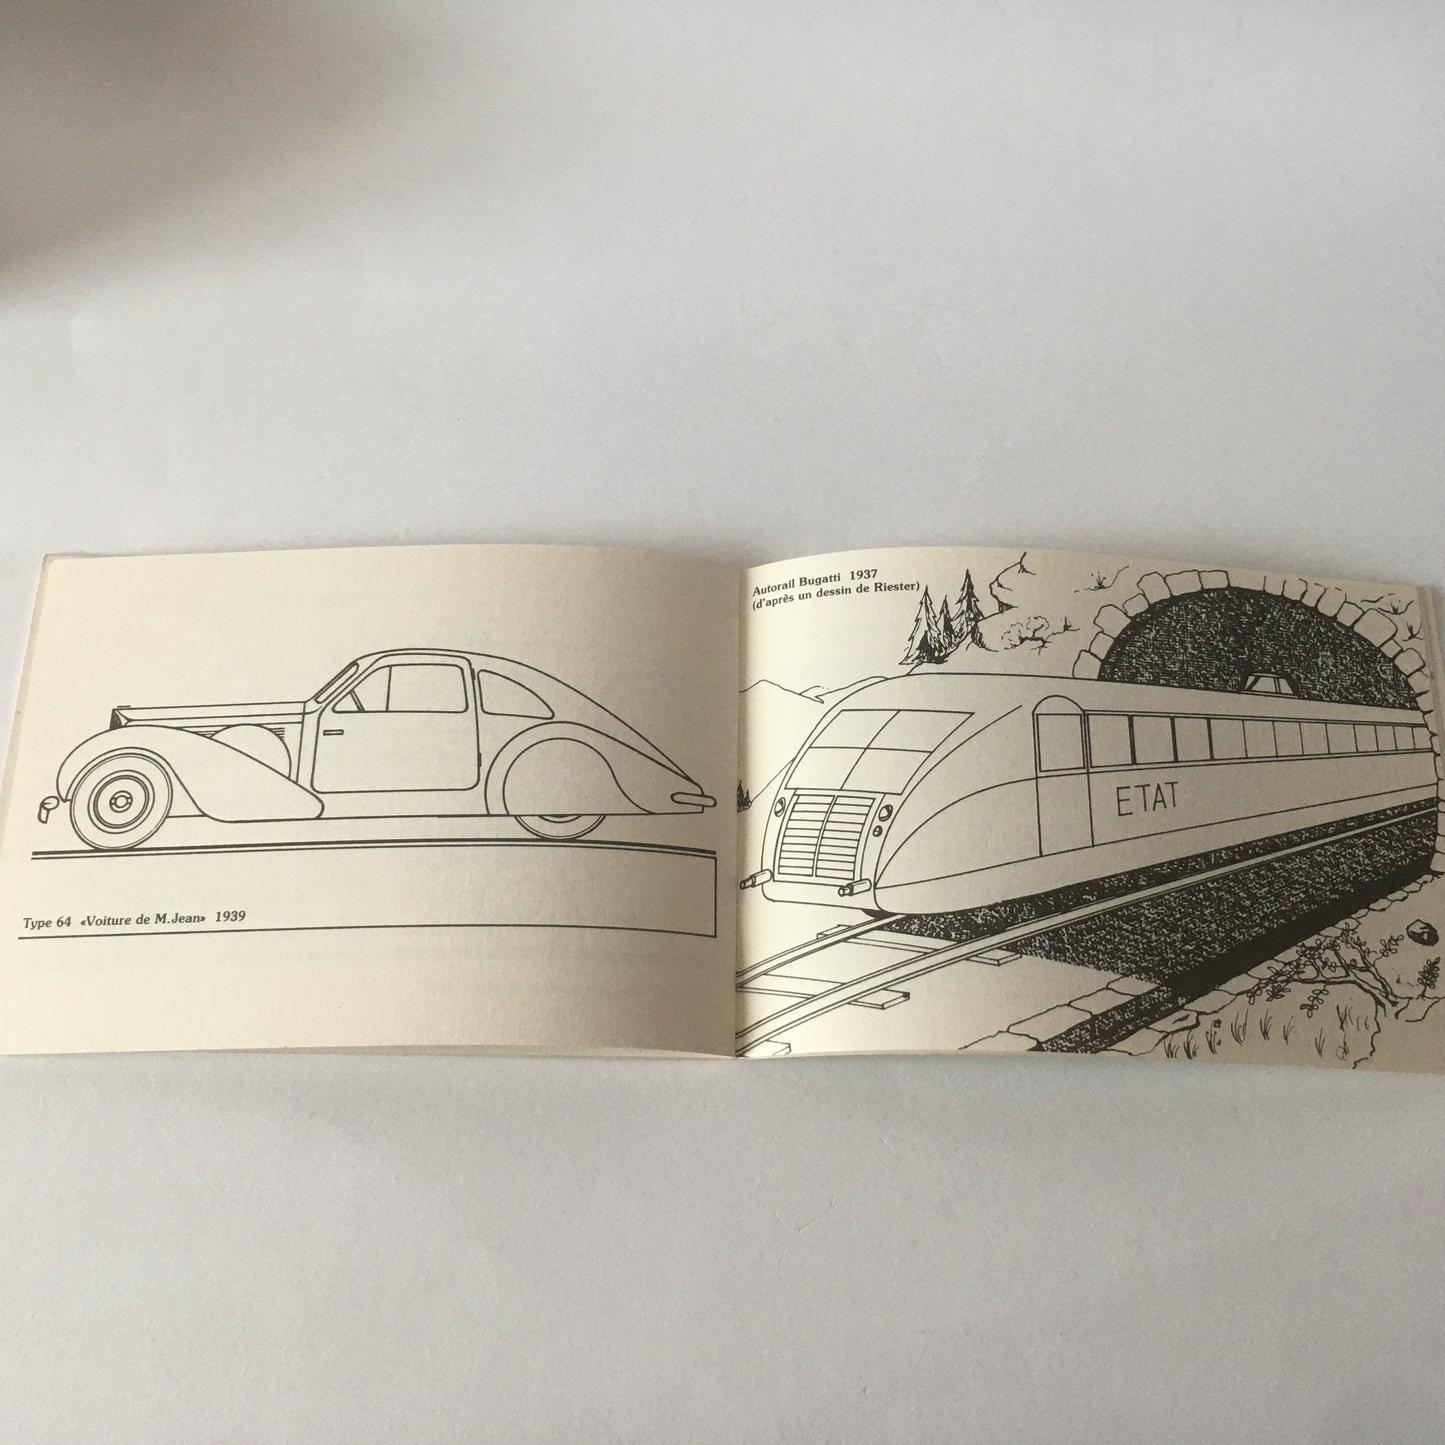 Bugatti, Bugatti Coloring Book by Paul Kestler